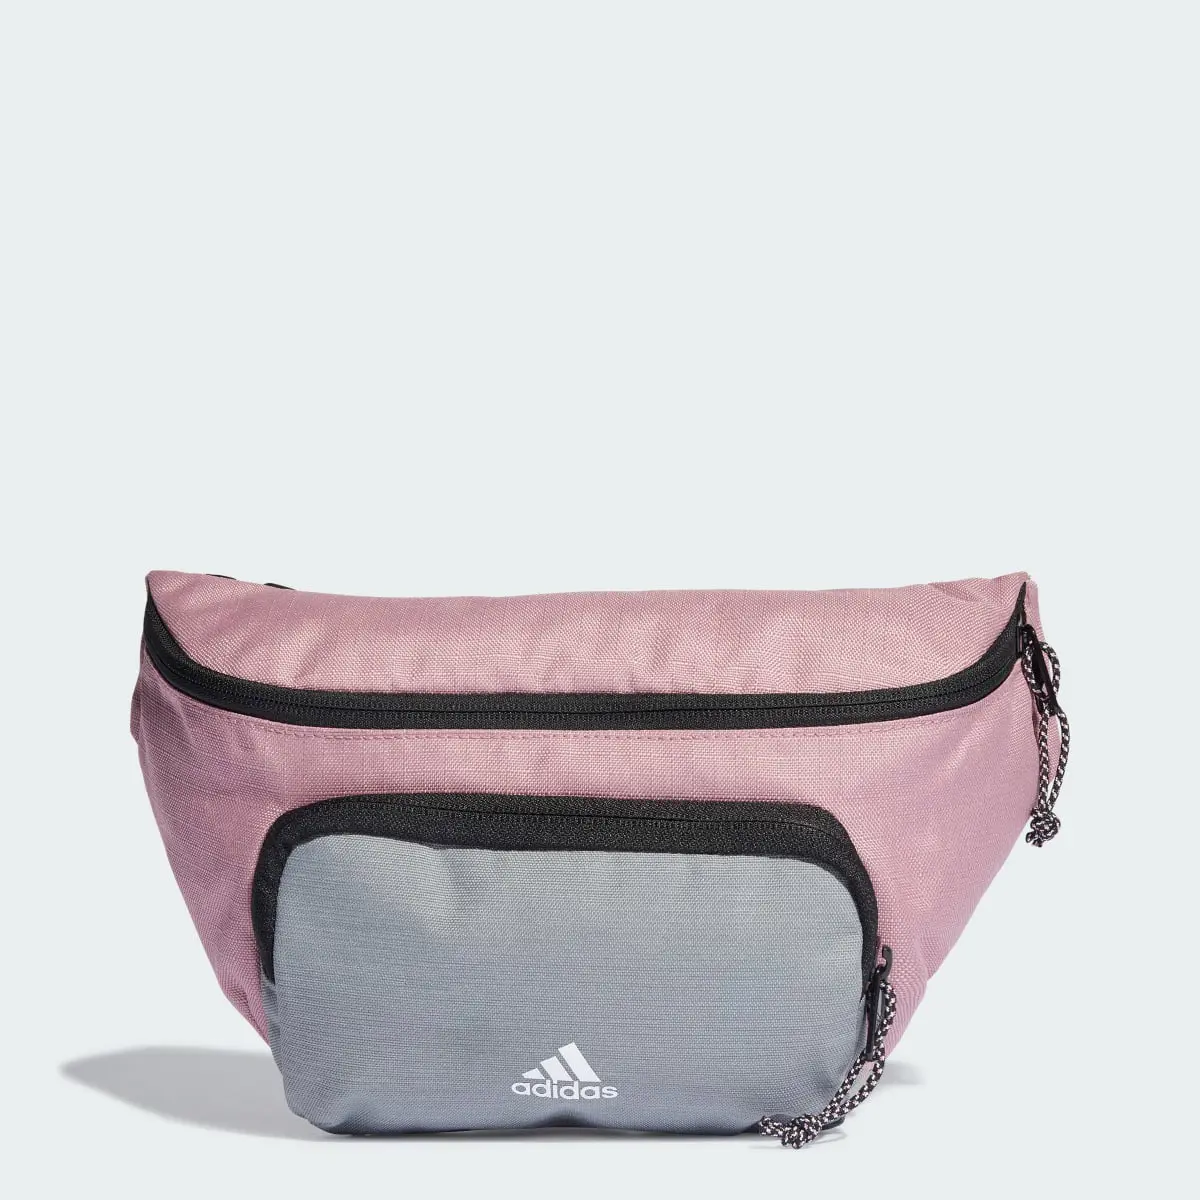 Adidas X_PLR Bum Bag. 1